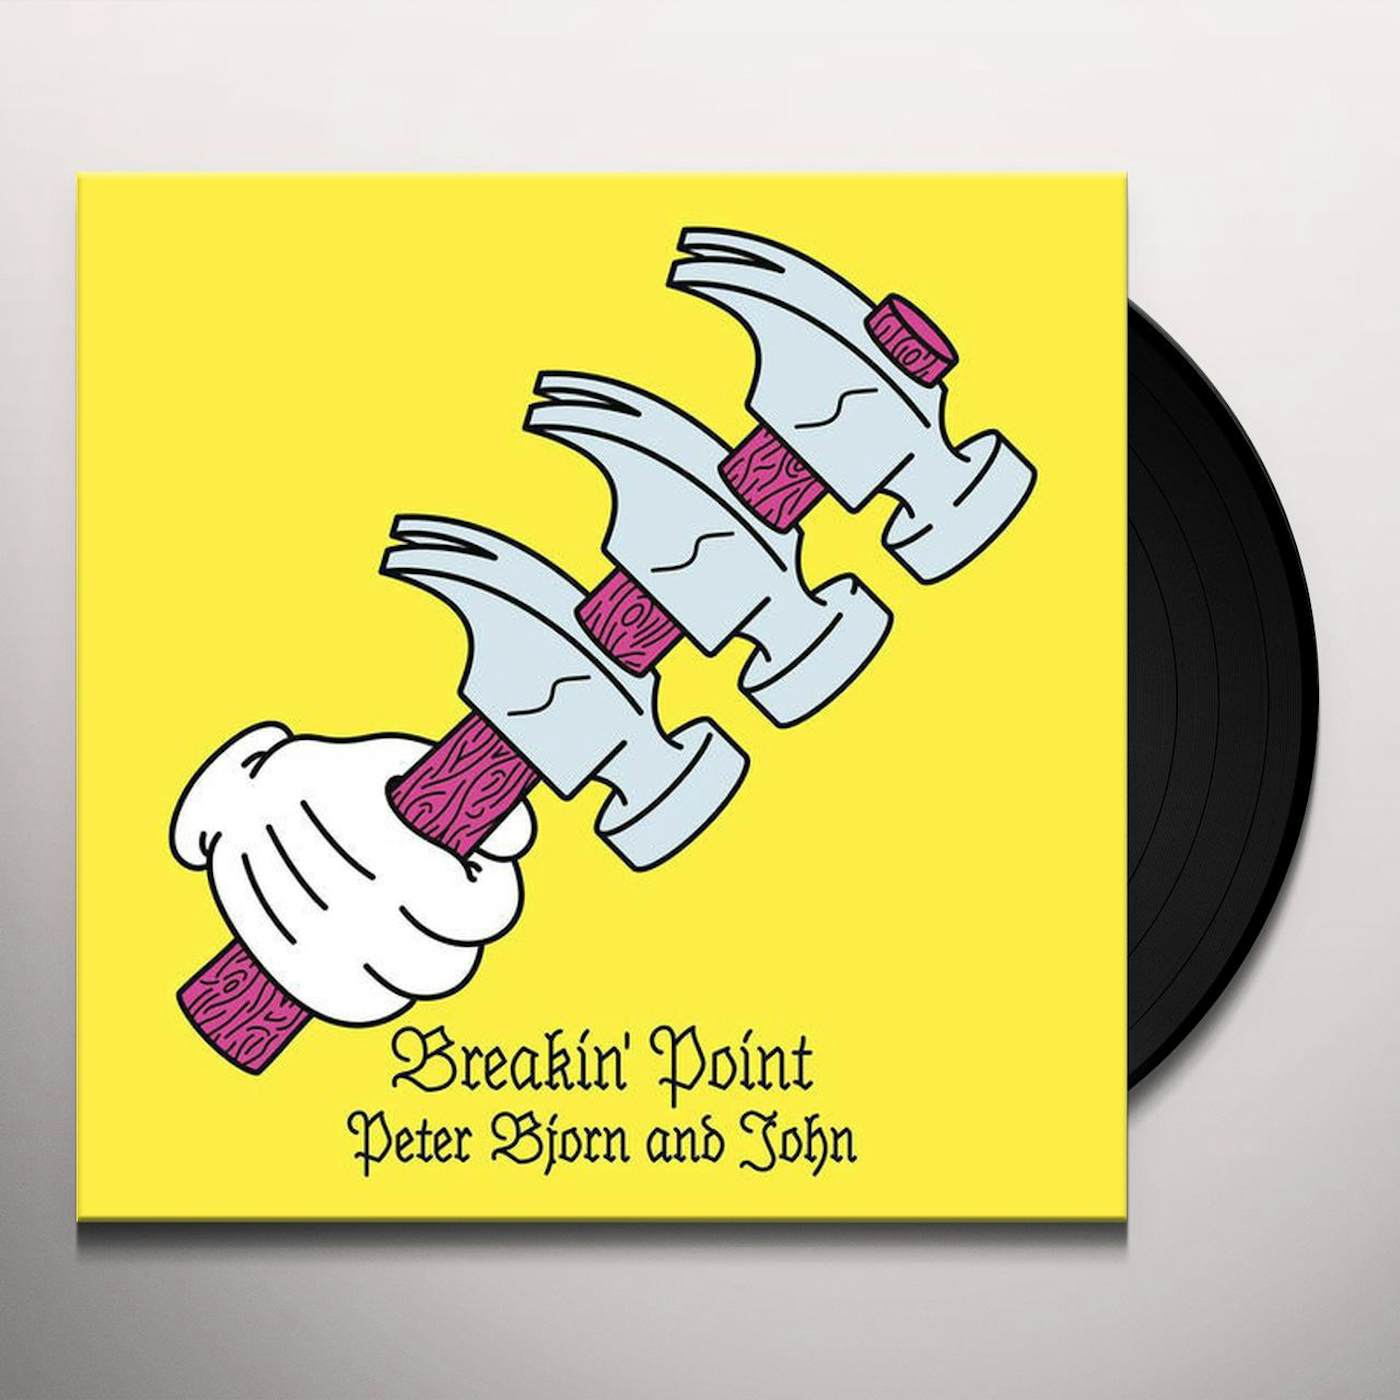 Peter Bjorn and John Breakin' Point Vinyl Record